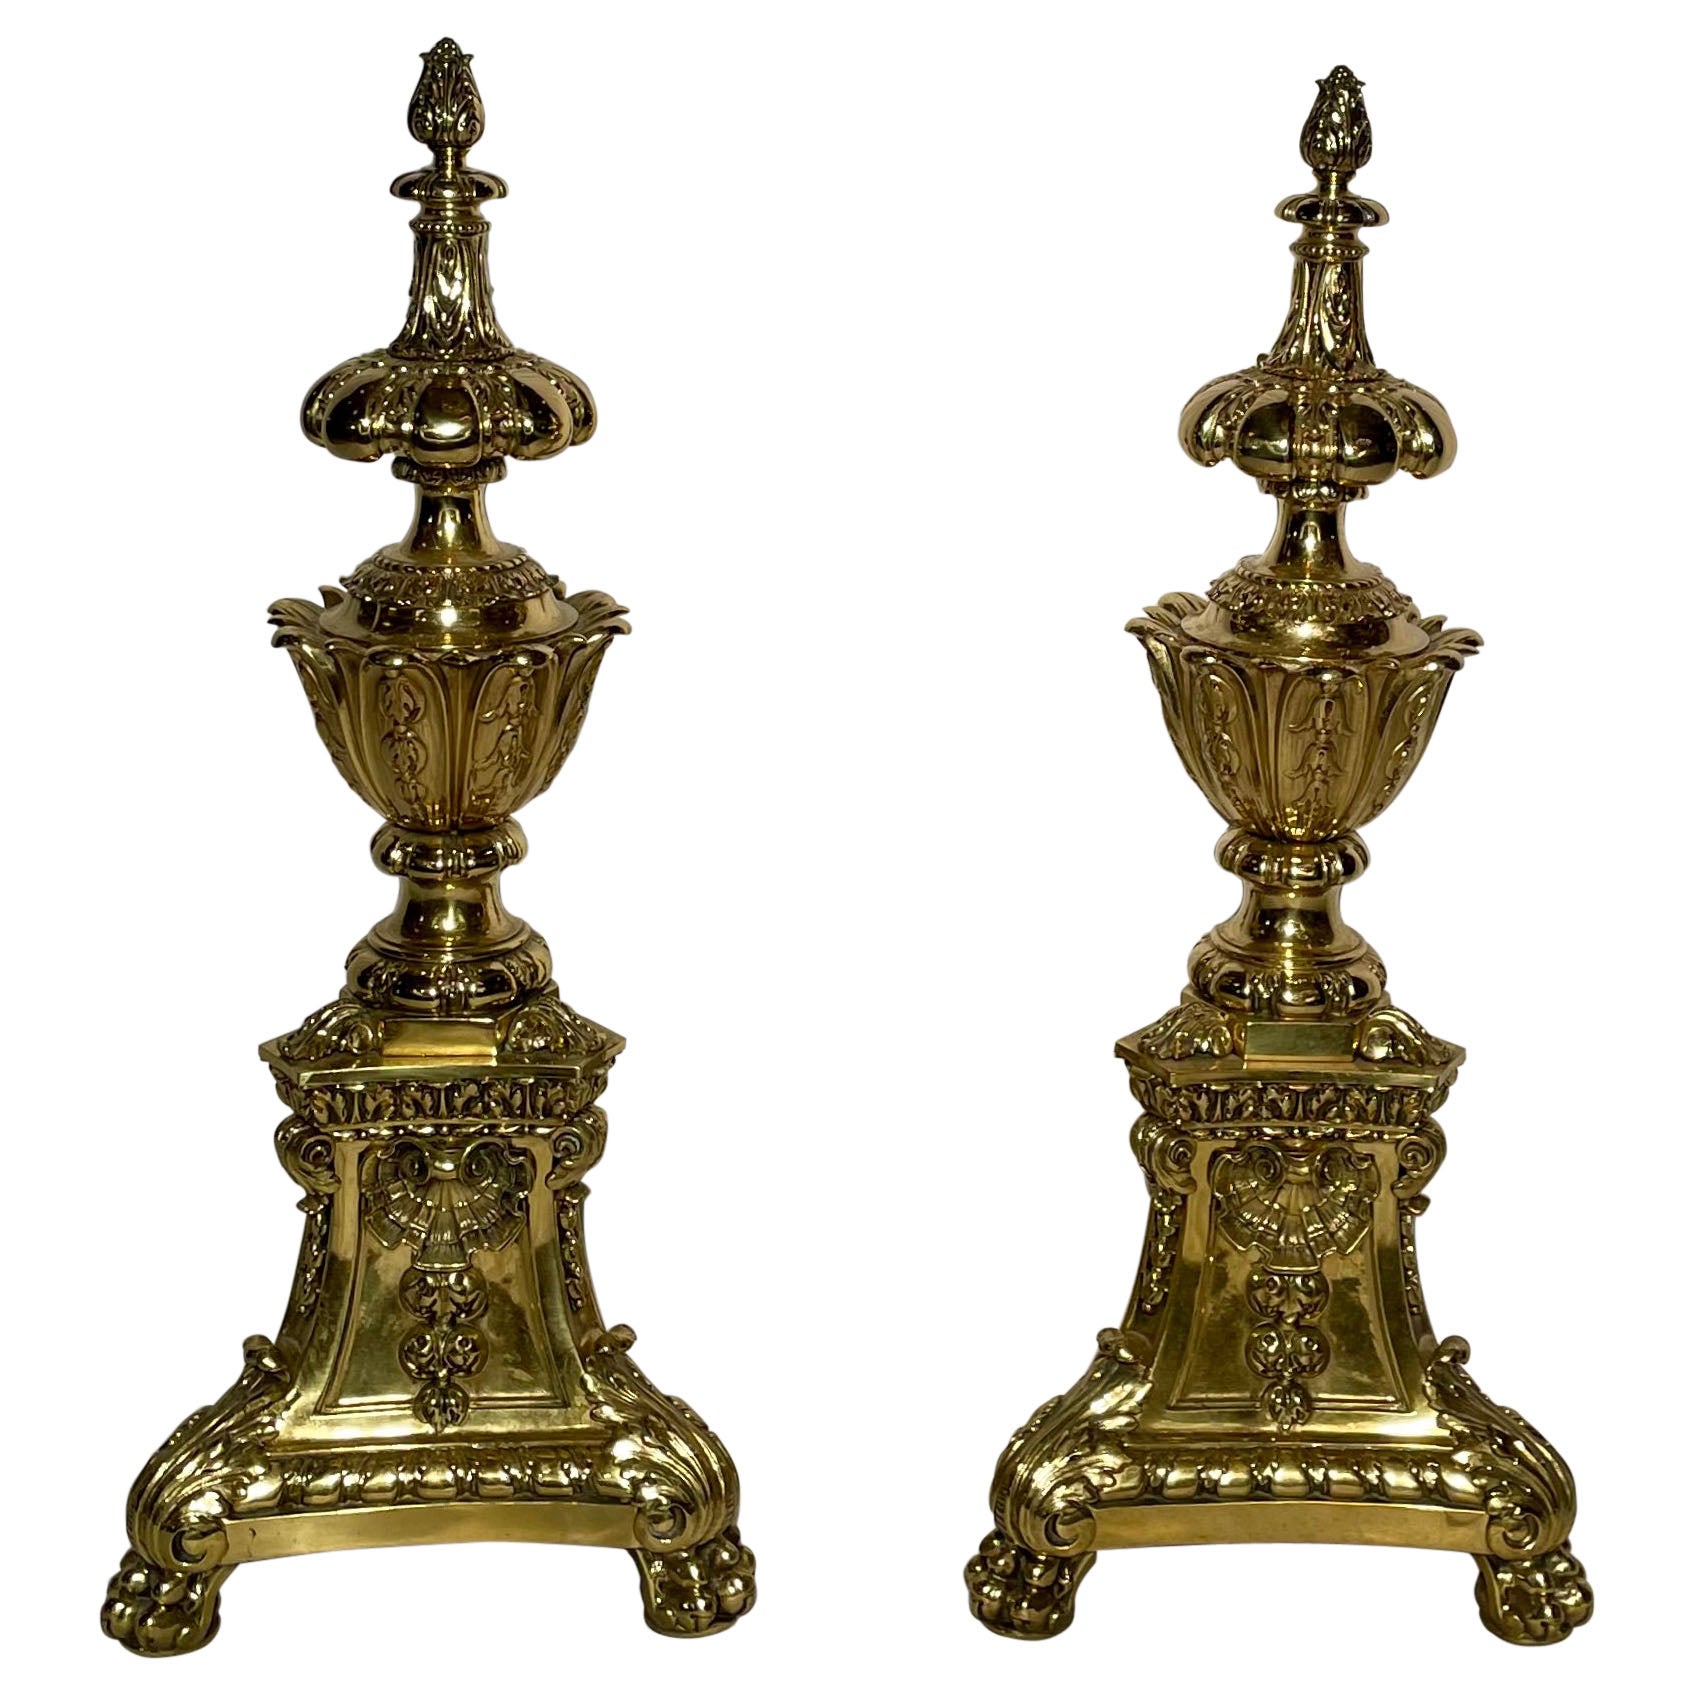 Pair of Antique English Brass Monumental Andirons, circa 1880